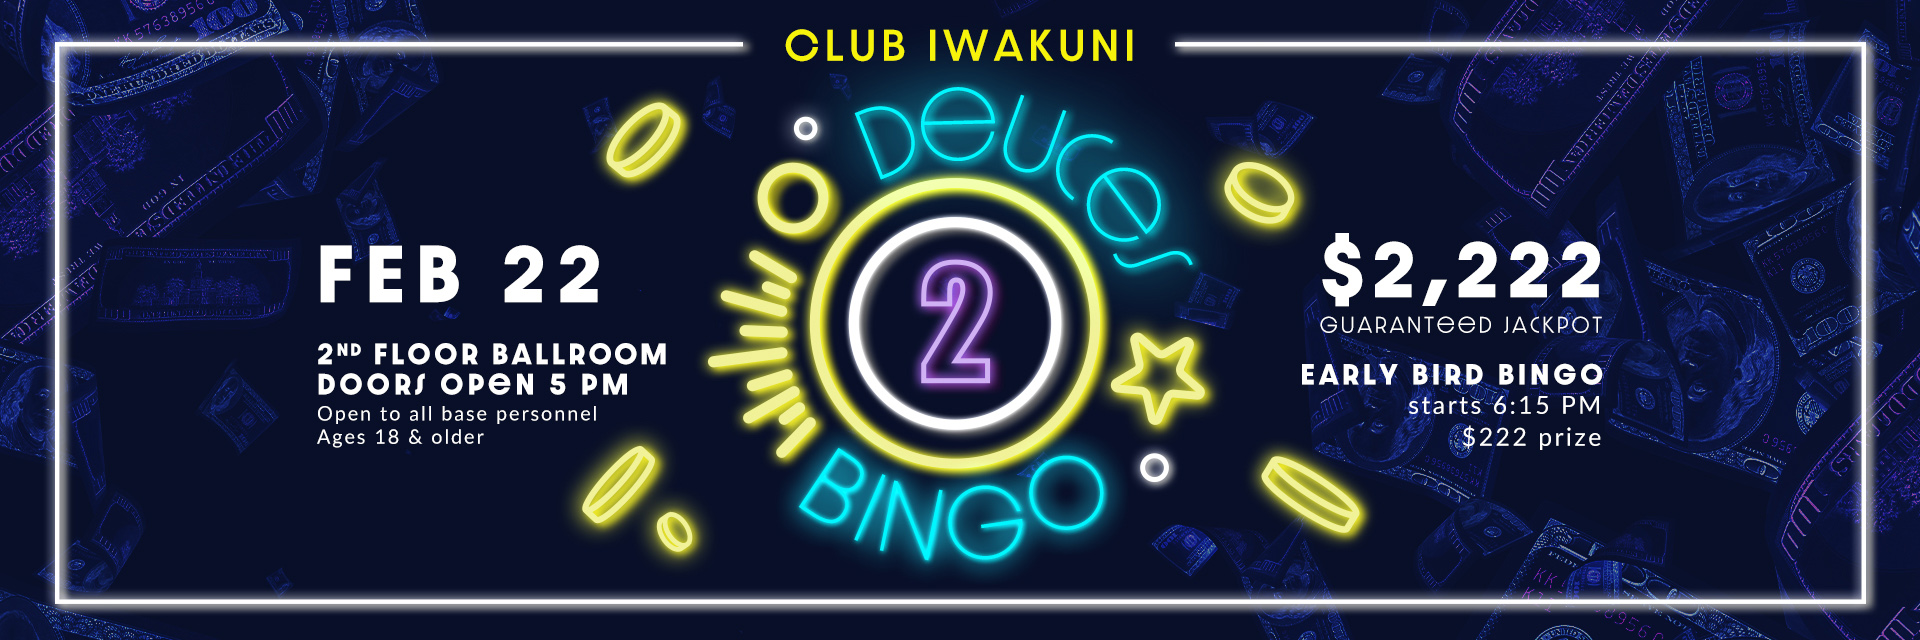 $2222 Jackpot at Deuces Bingo on FEB 22 at Club Iwakuni